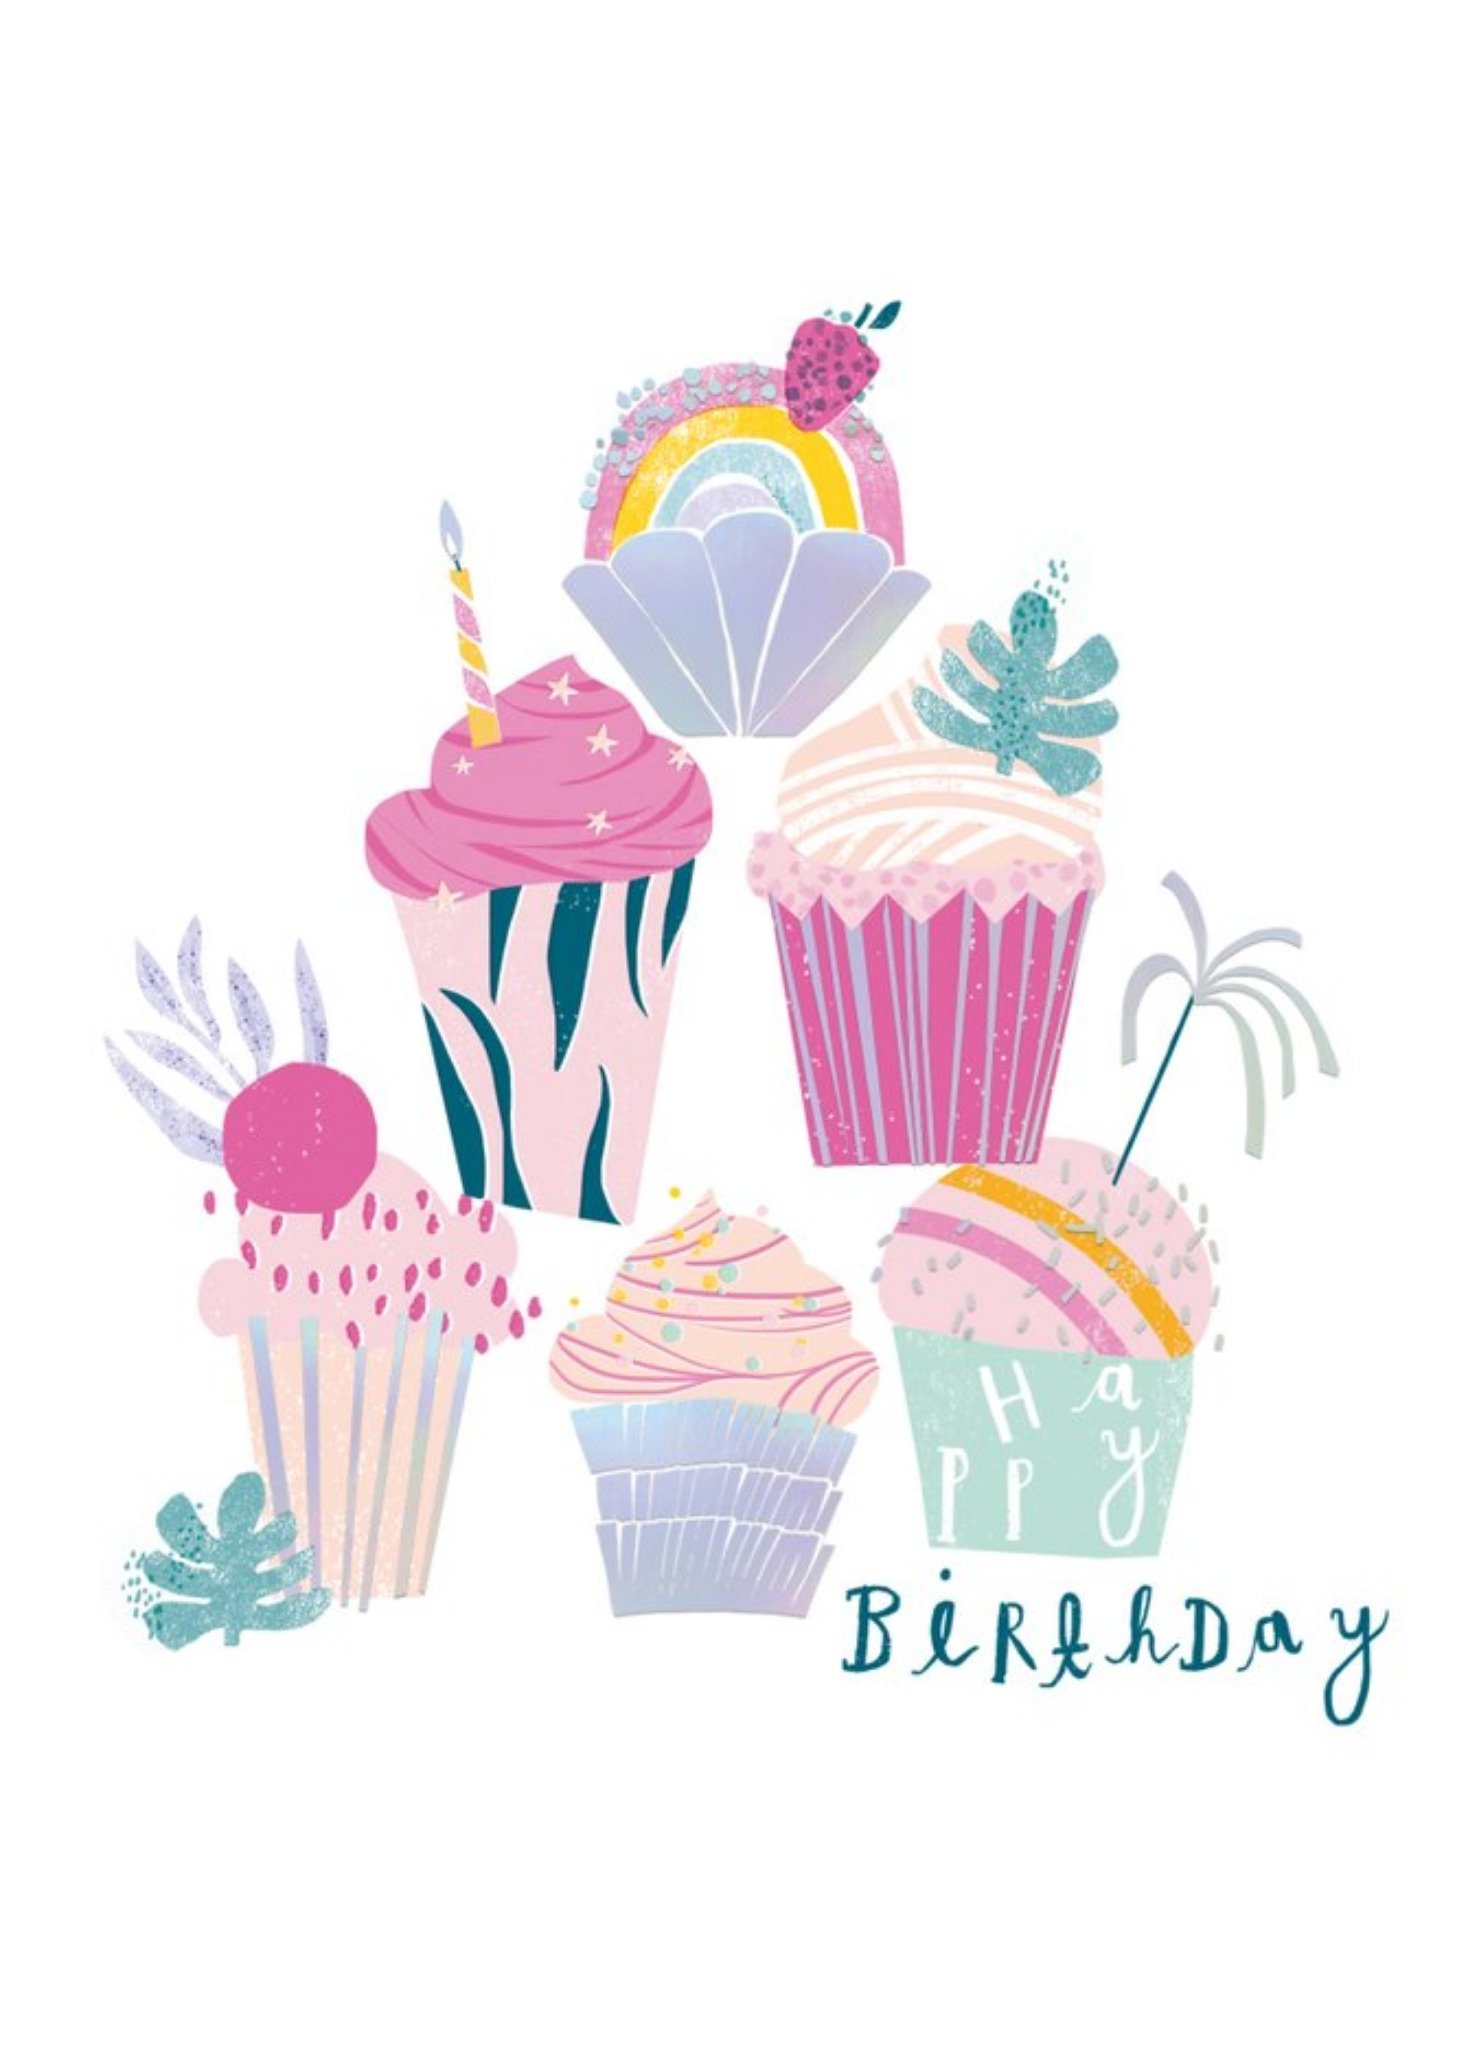 Moonpig Mermaid Colouful Fun Cupcakes Birthday Card, Large